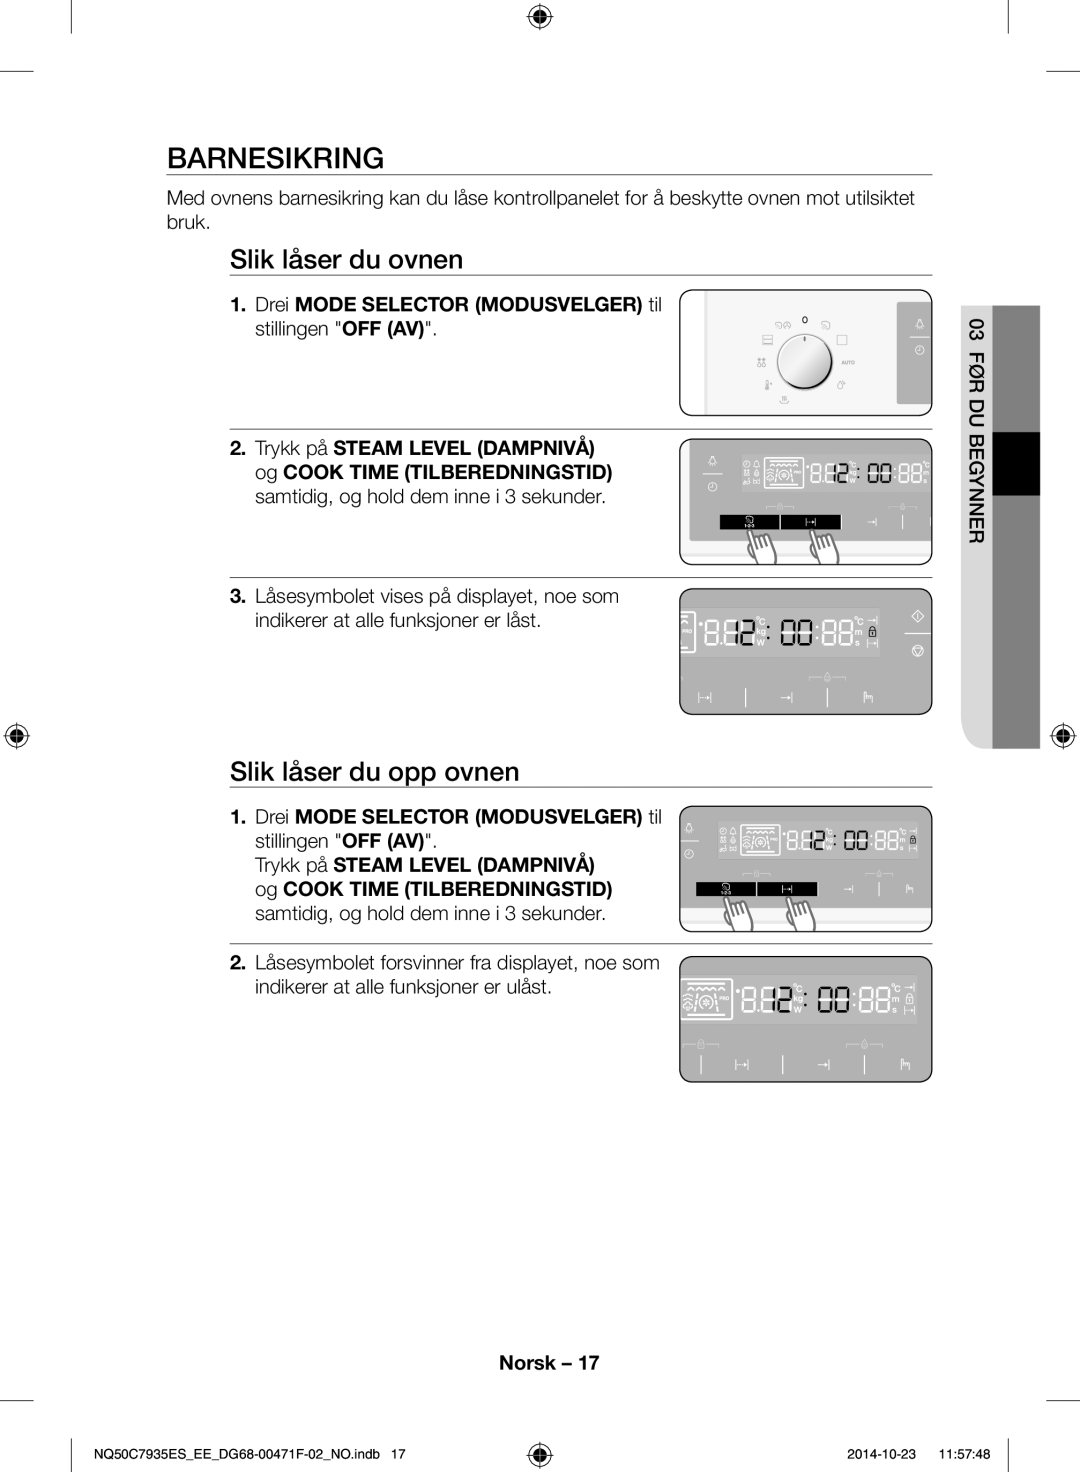 Samsung NQ50C7935ES/EE manual Barnesikring, Slik låser du ovnen, Slik låser du opp ovnen 